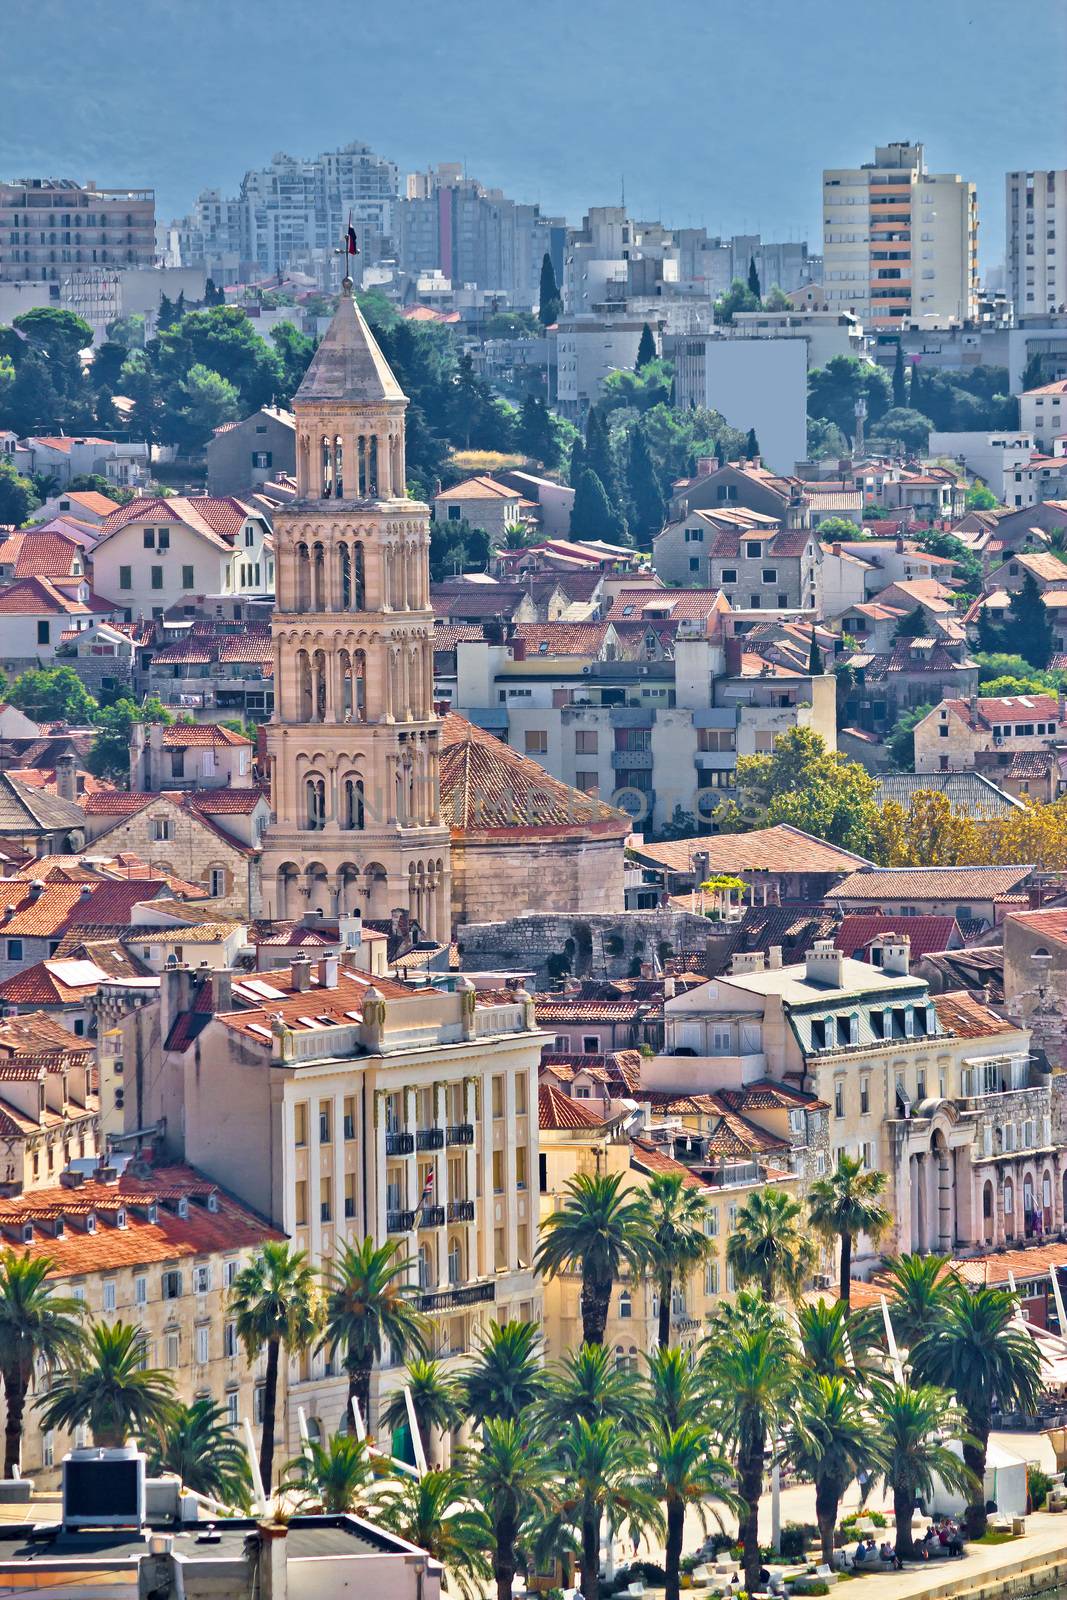 Old Split city center vertical view by xbrchx